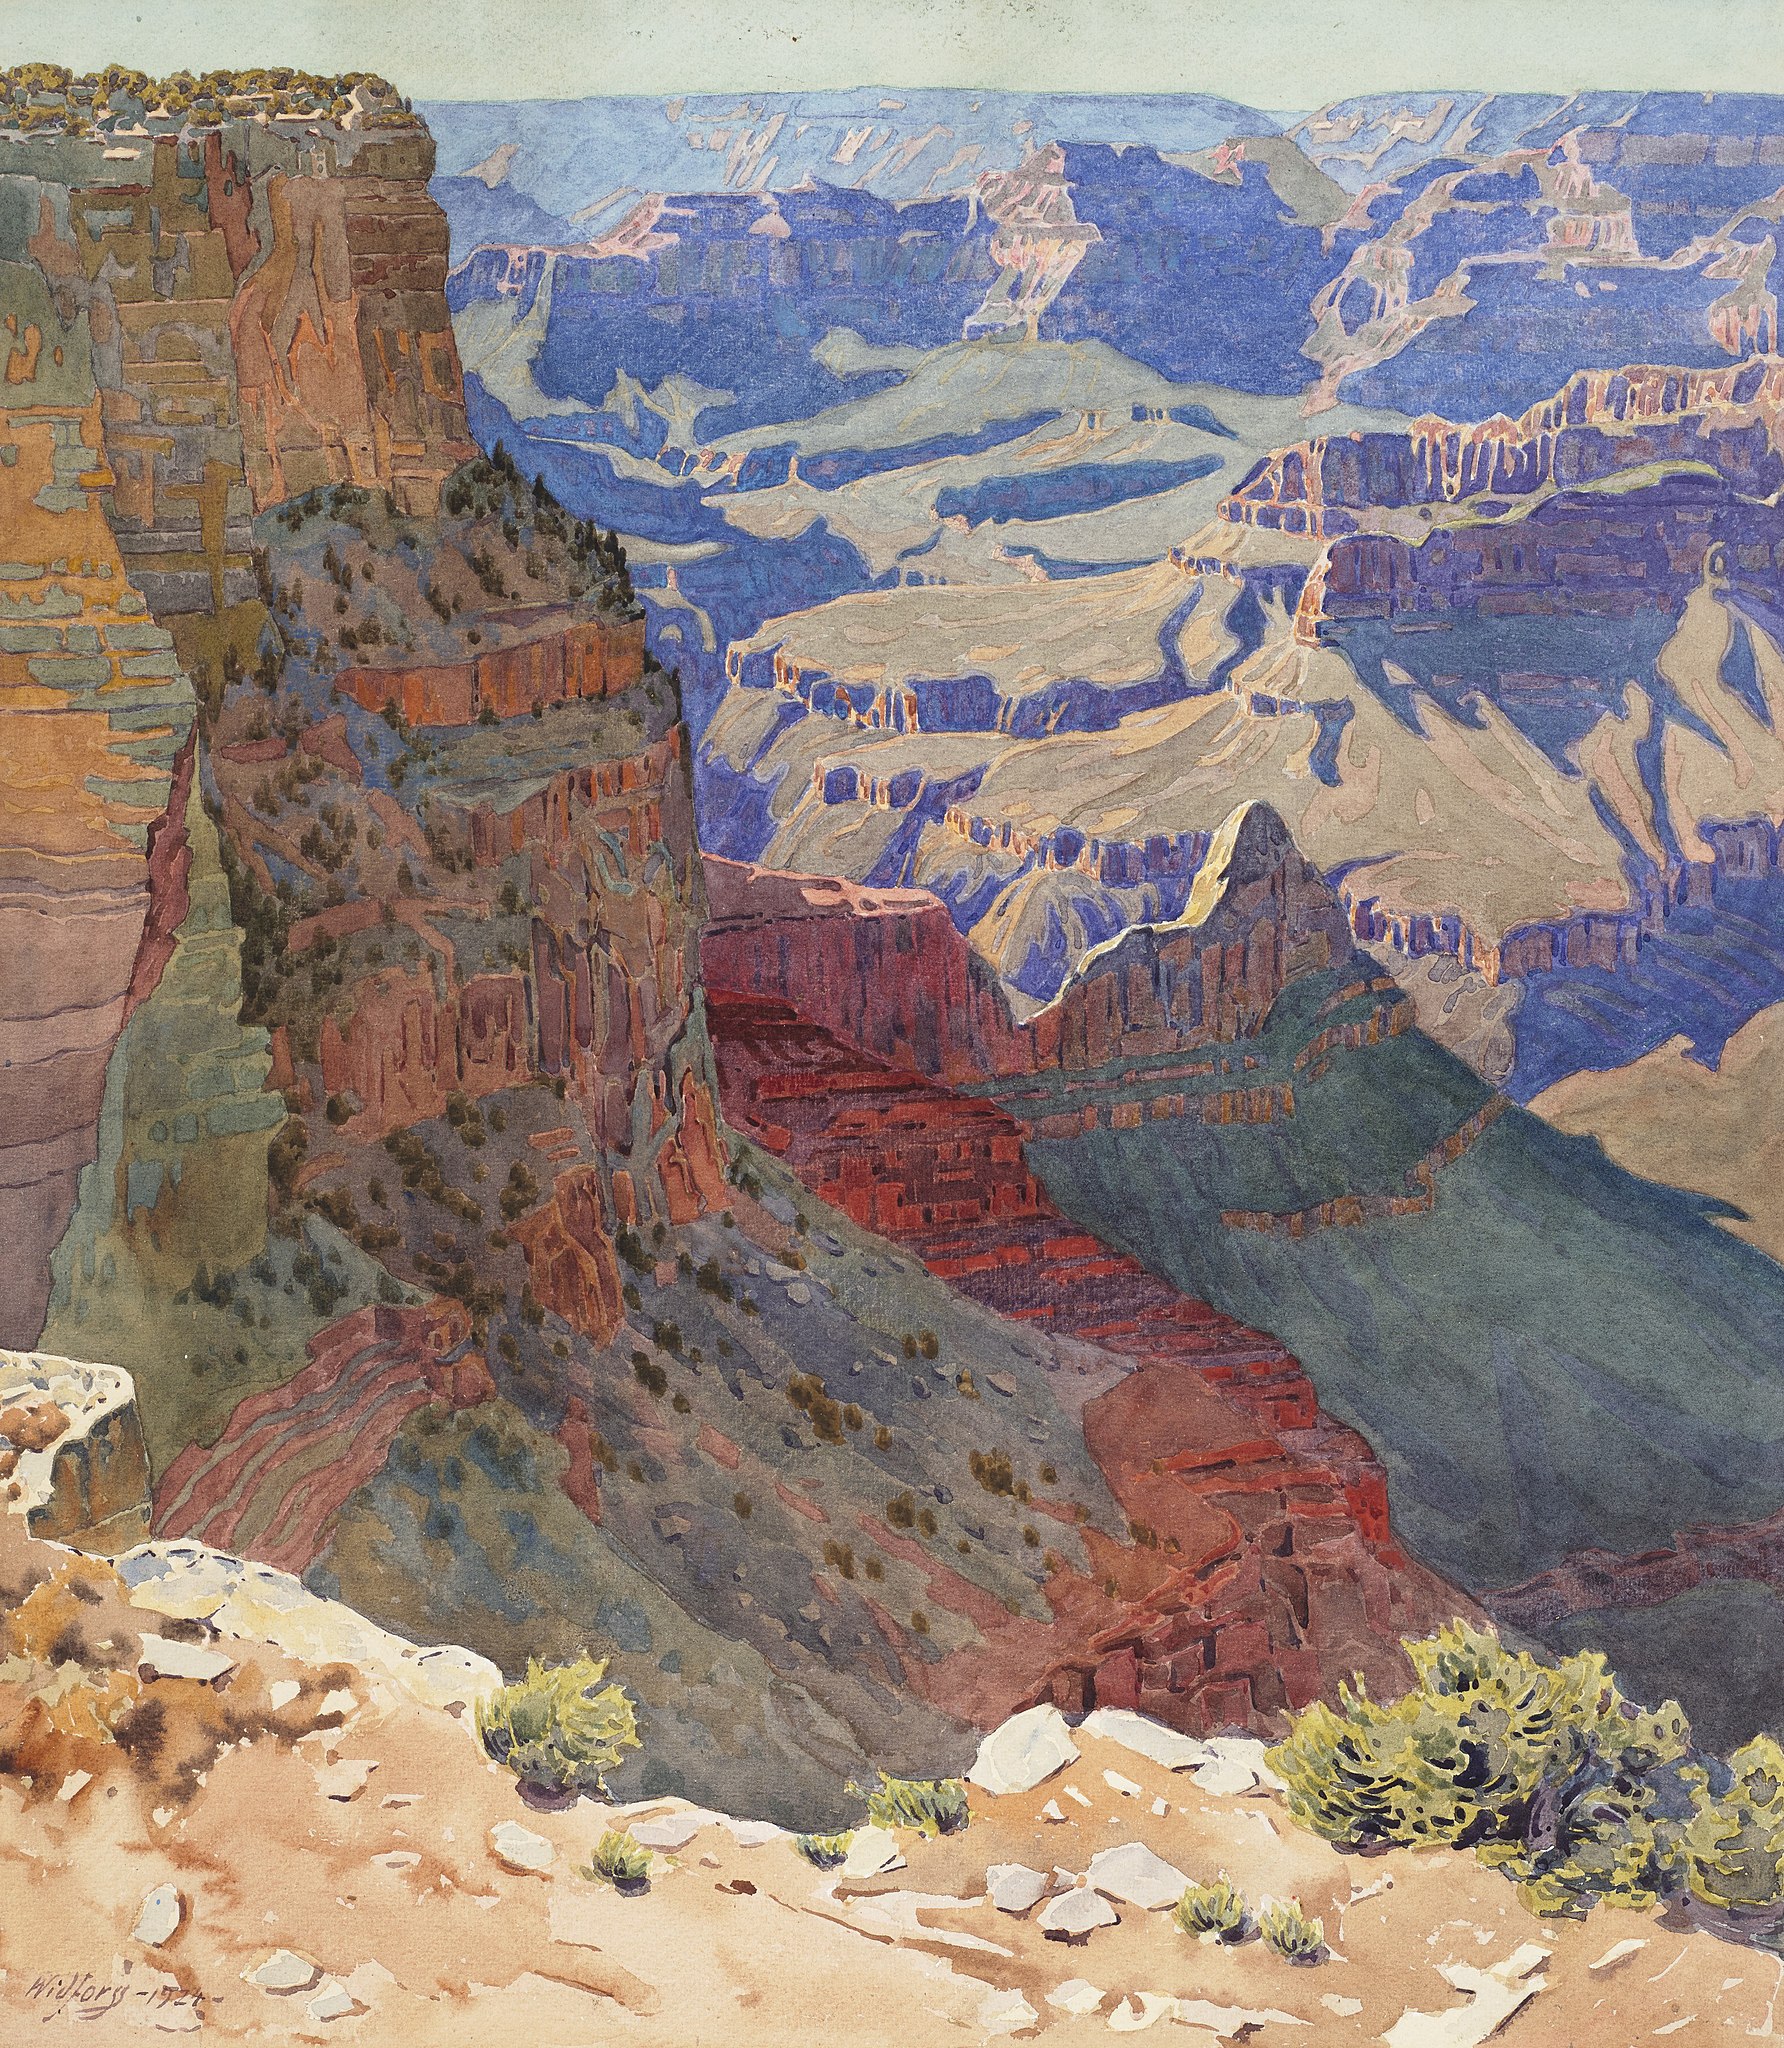 Grand Canyon by Gunnar Widforss - Fin des années 1920 - 50.8 x 44.5 cm collection privée